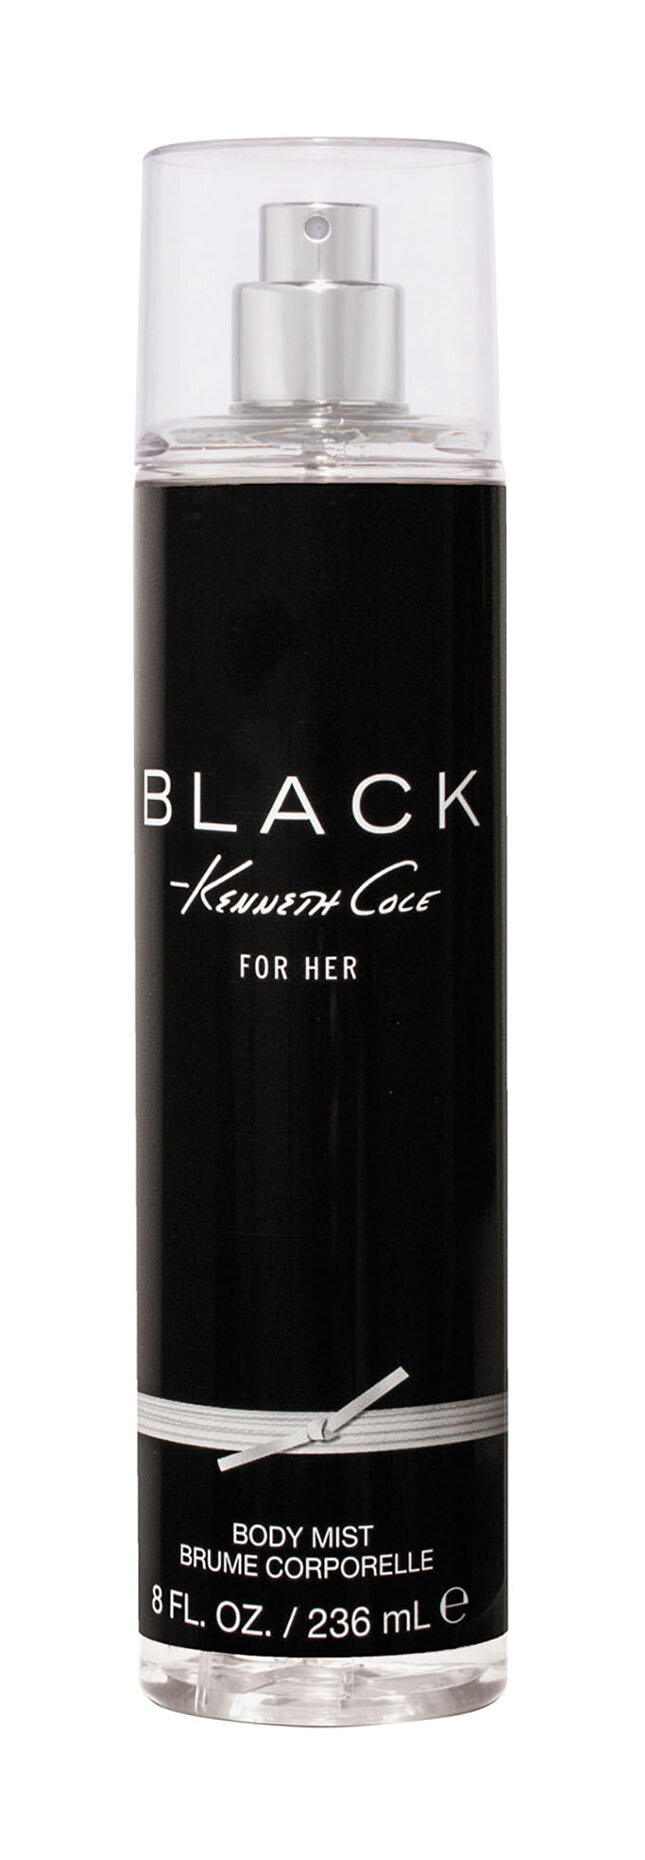 KENNETH COLE Black For Her Спрей для тела жен, 236 мл